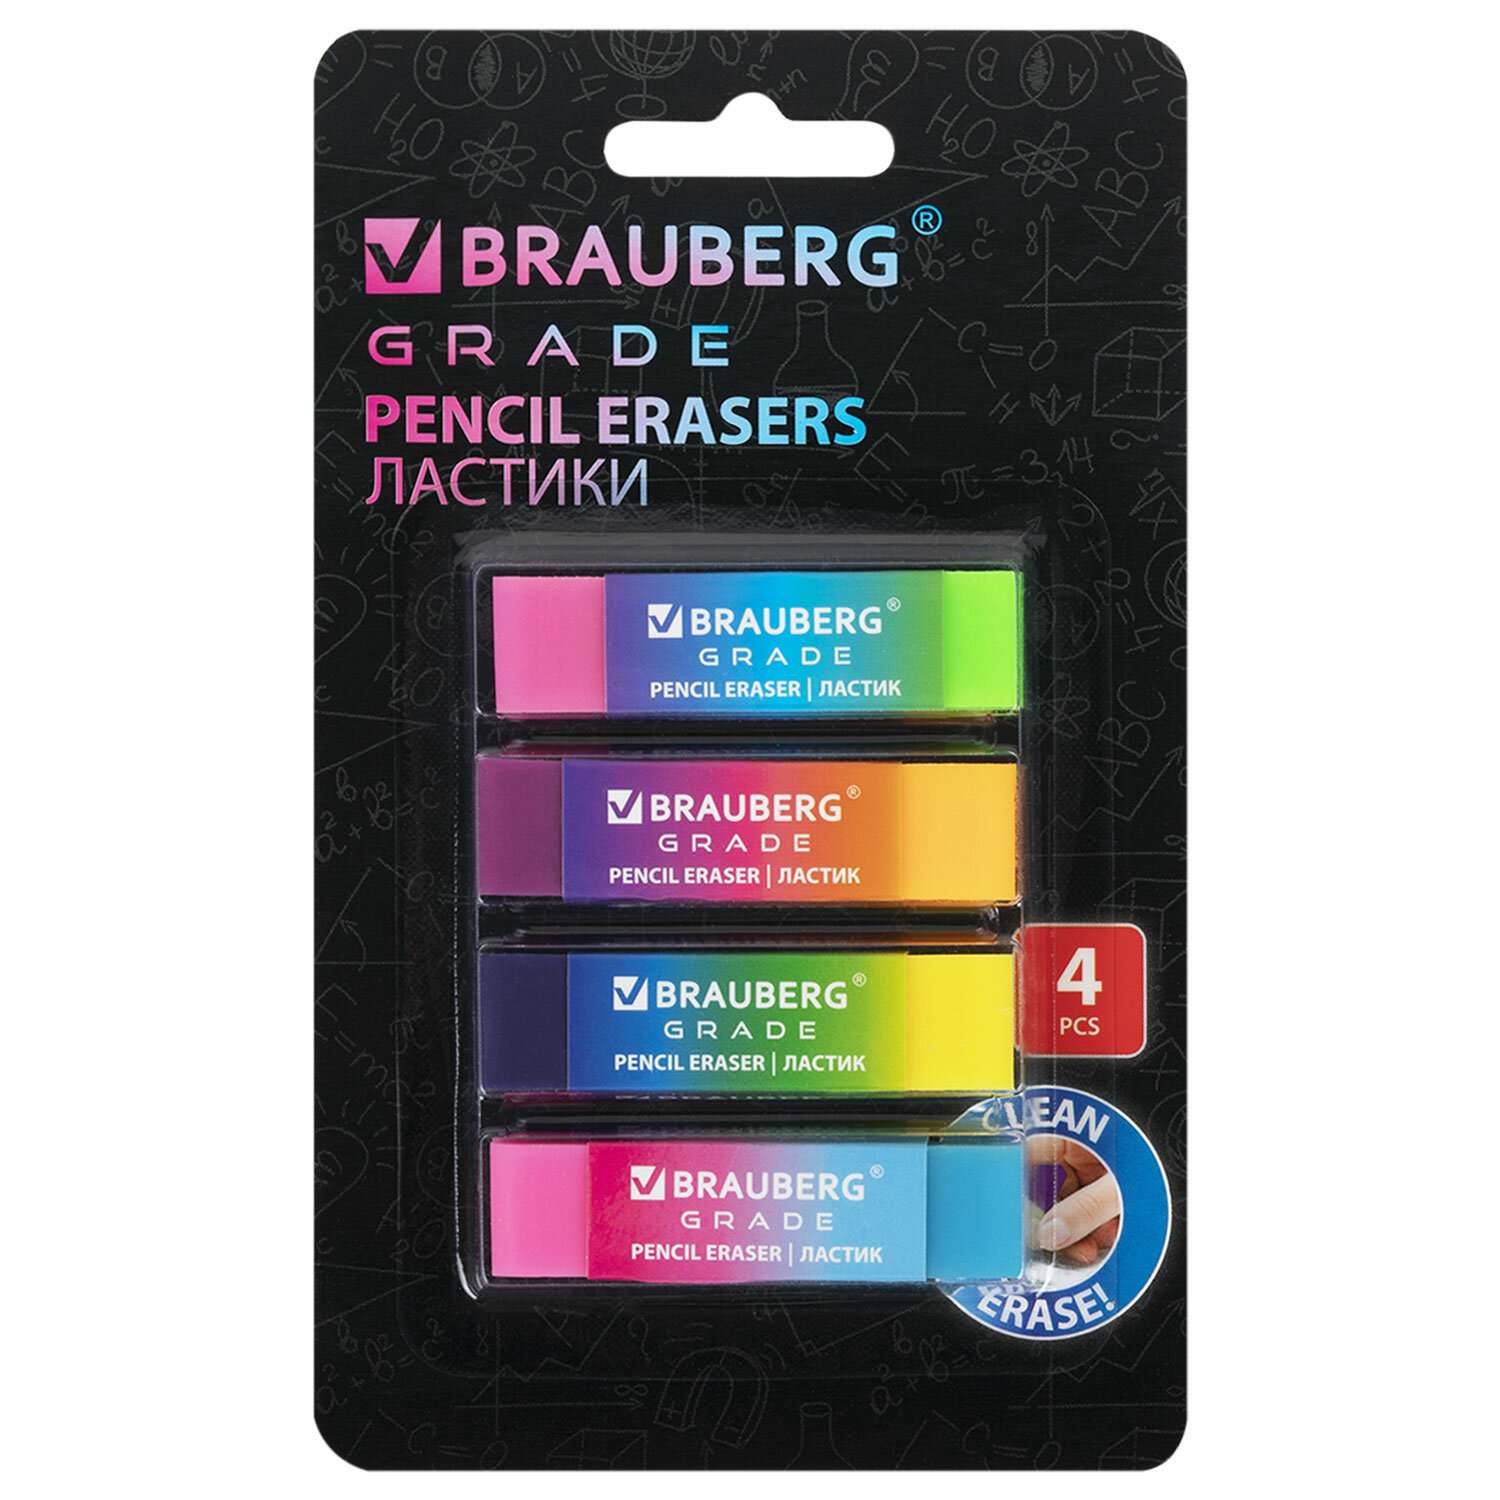 Ластик Brauberg школьный набор 4 штуки стирательная резинка канцелярская для карандаша - фото 1